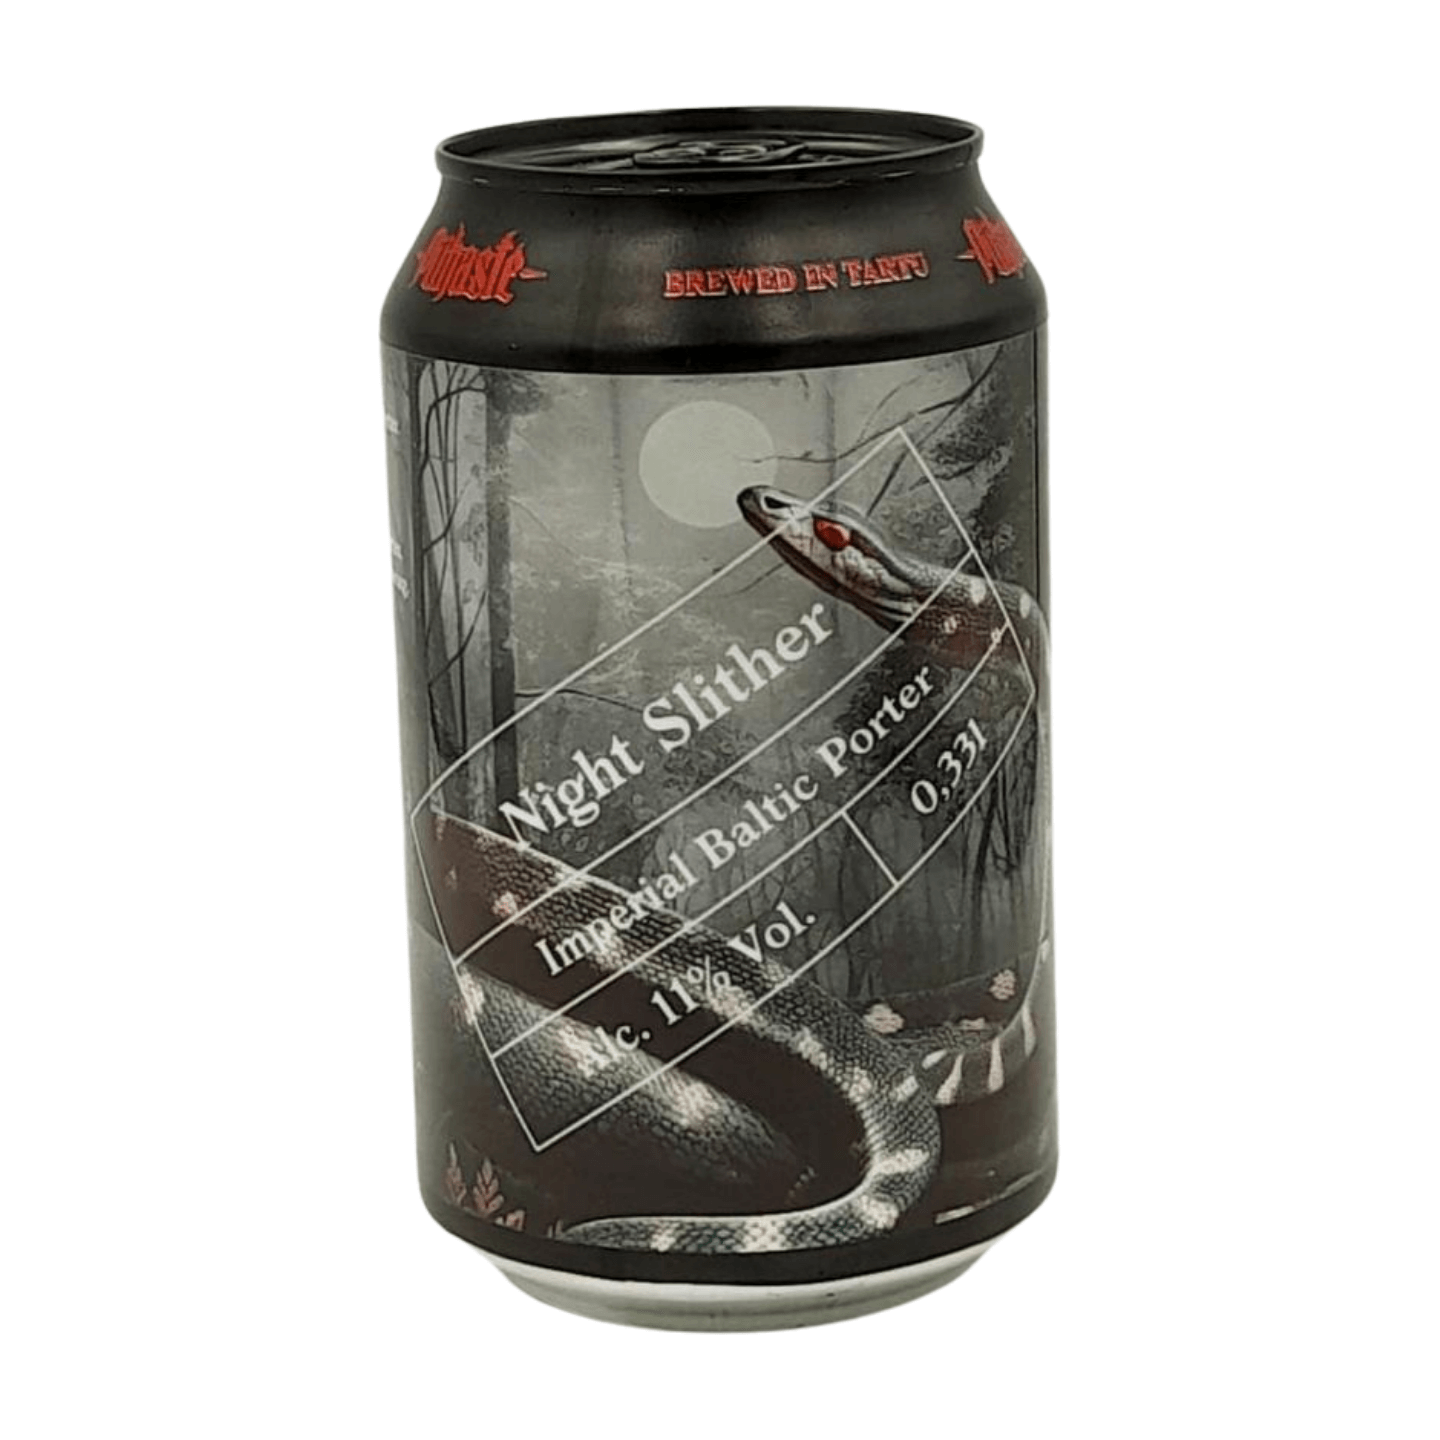 Pühaste x Frontaal Brewing Co. Night Slither | Imperial Baltic Porter Webshop Online Verdins Bierwinkel Rotterdam